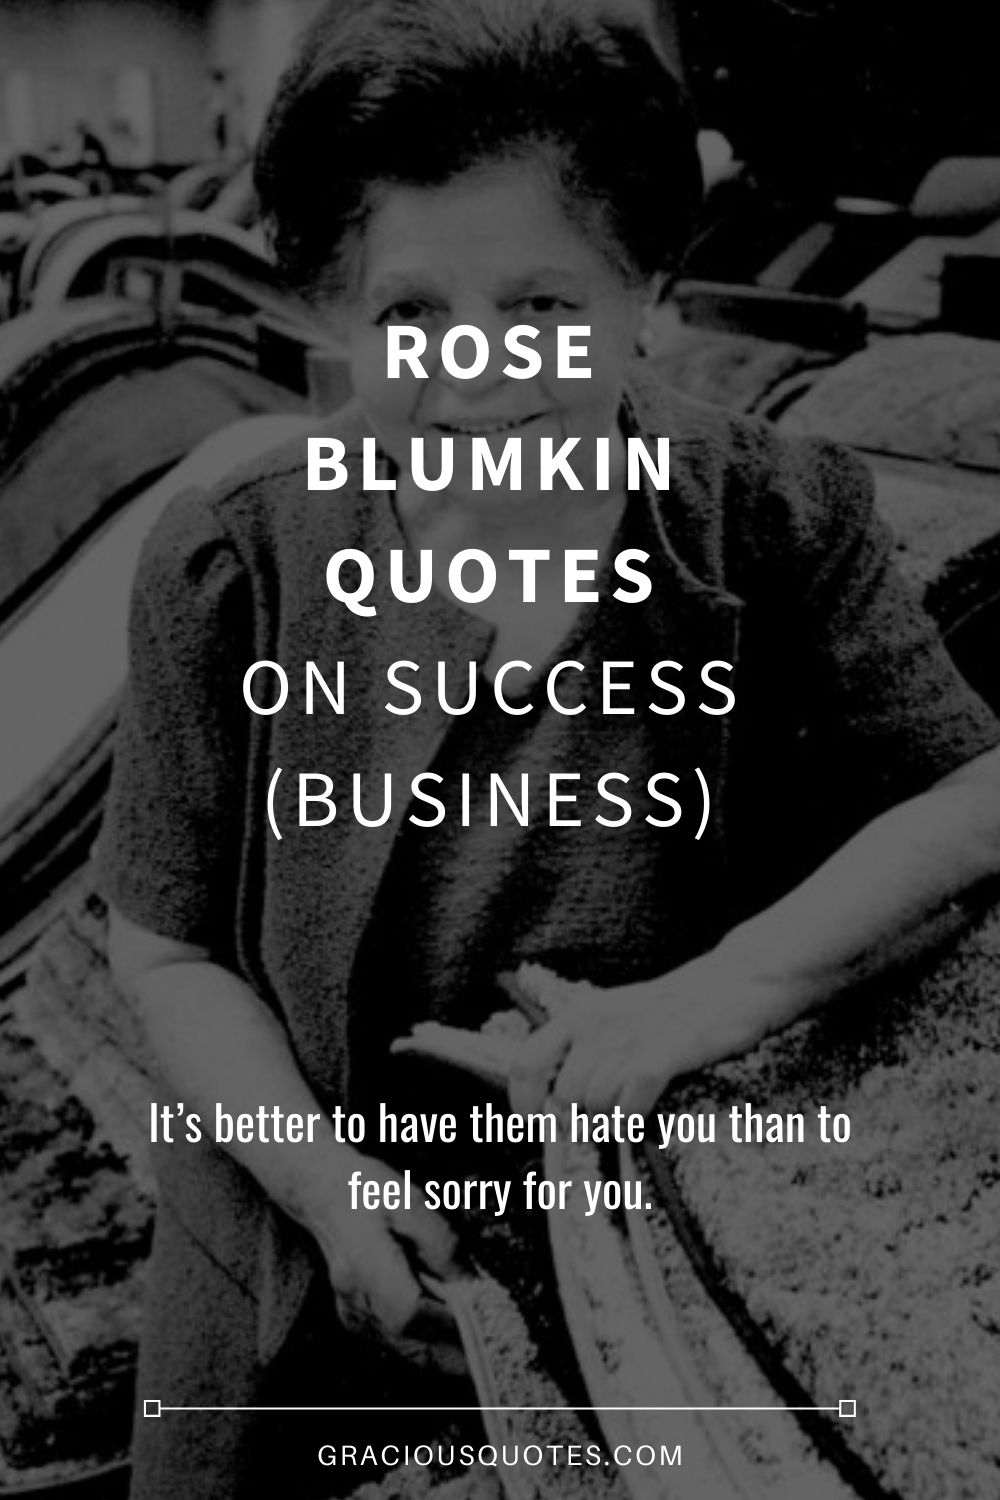 Rose Blumkin Quotes on Success (BUSINESS) - Gracious Quotes